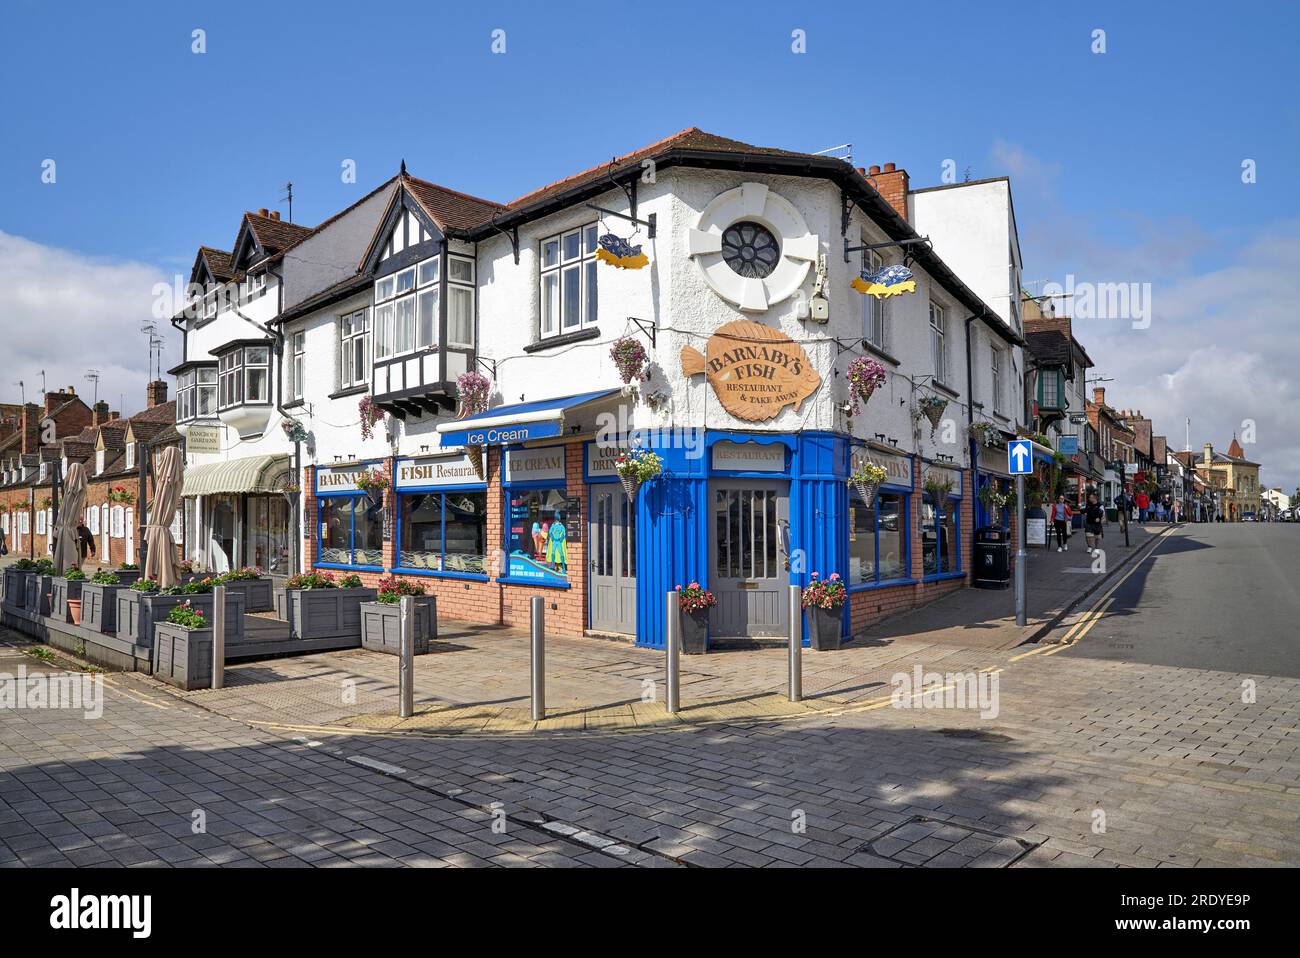 Barnabys Fish restaurant corner Waterside and Sheep Street, Stratford upon Avon, England, UK Stock Photo